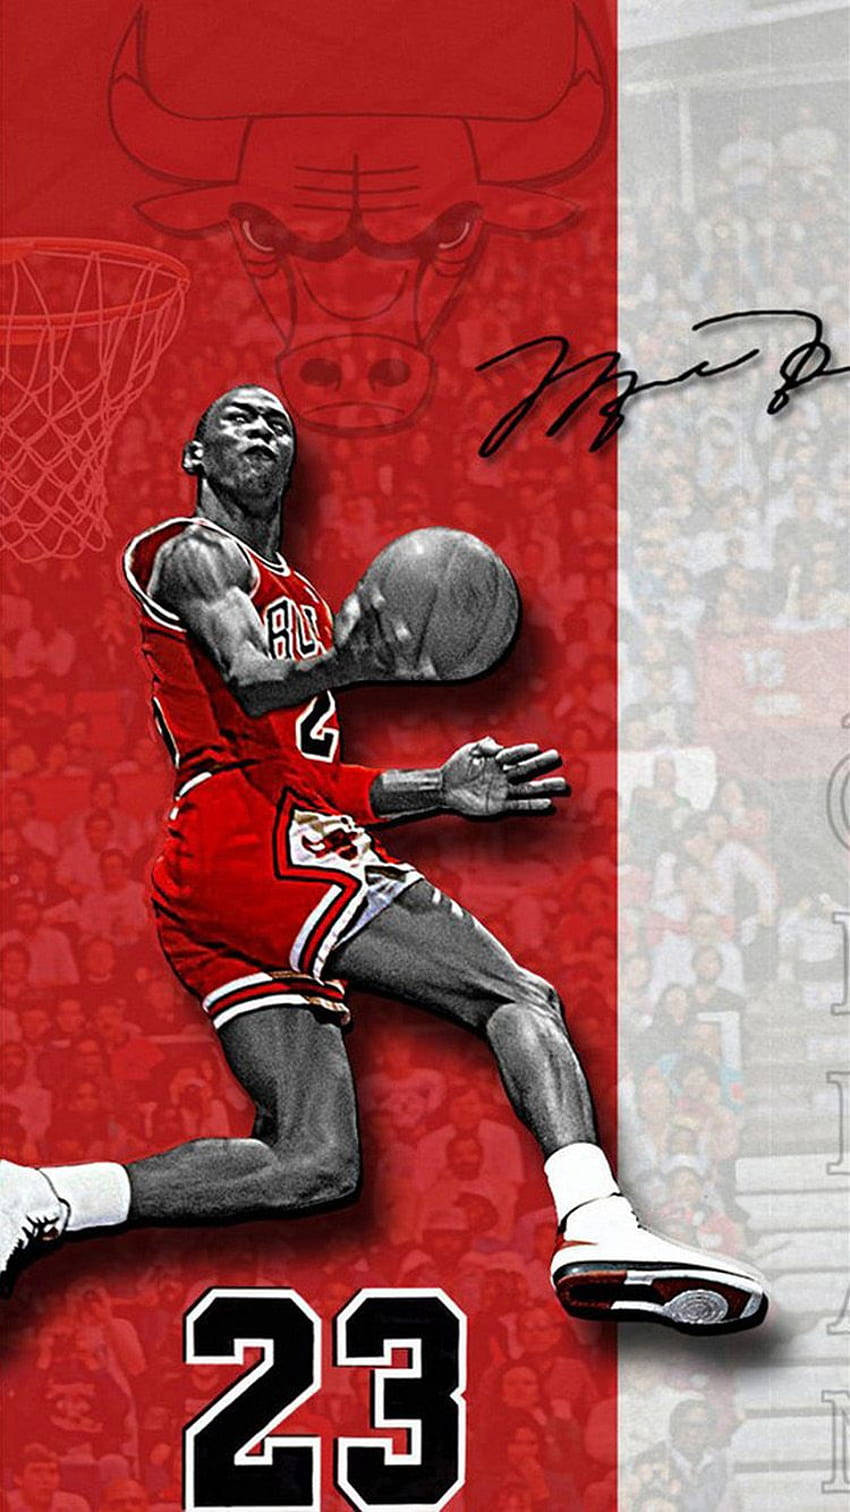 Cool Autographed Jordan Fan-art Background